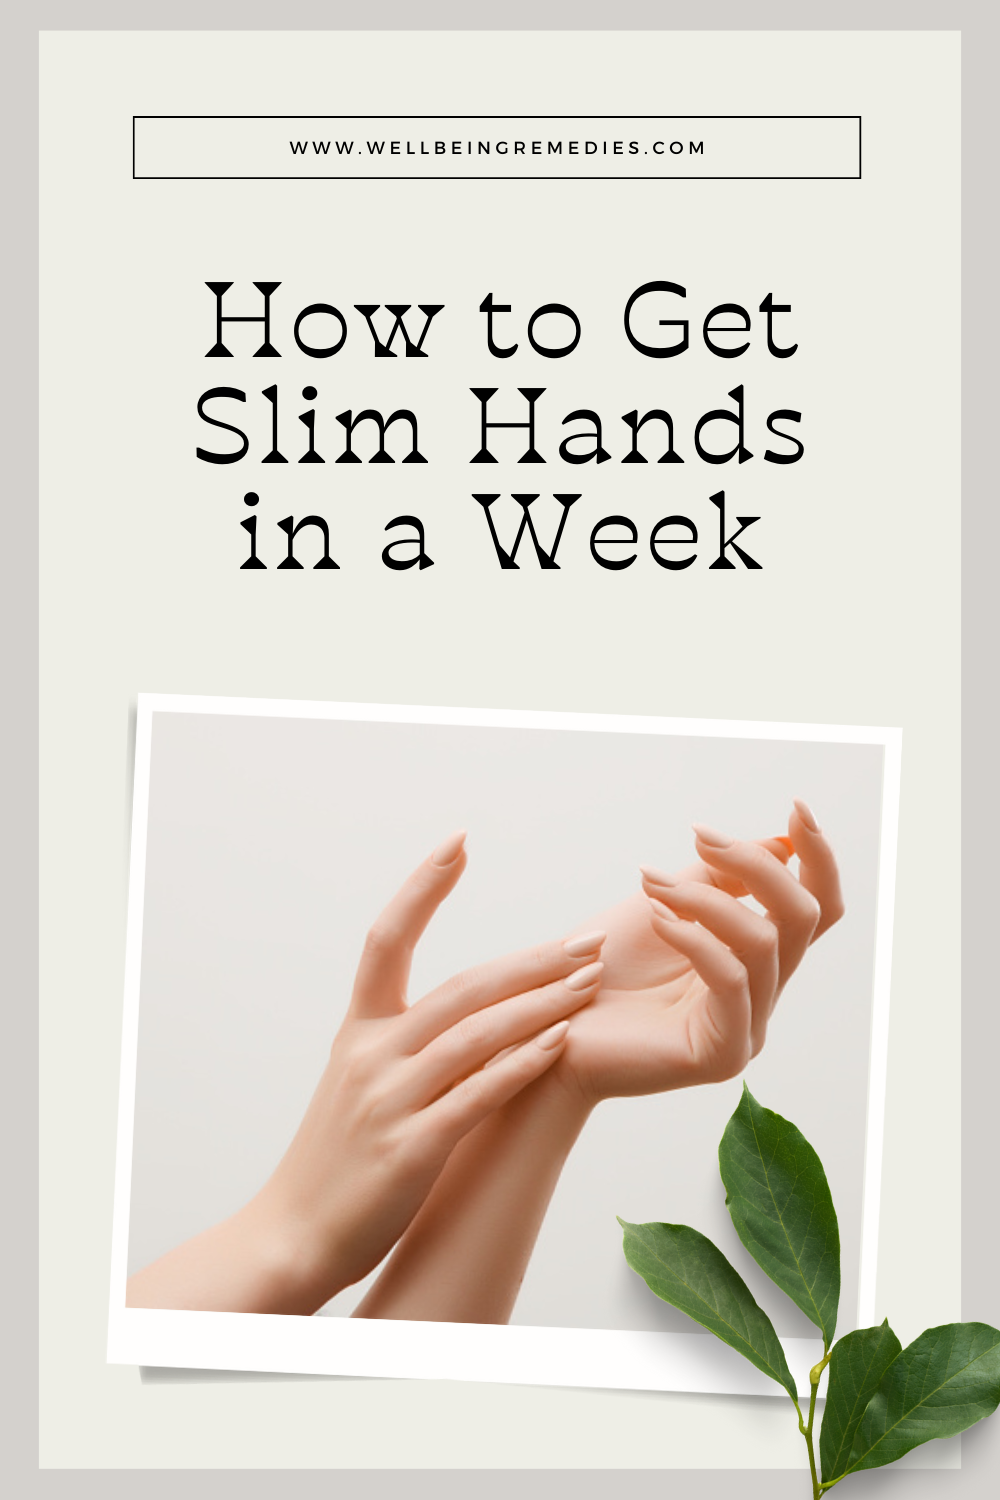 How to Get Slim Hands in a Week